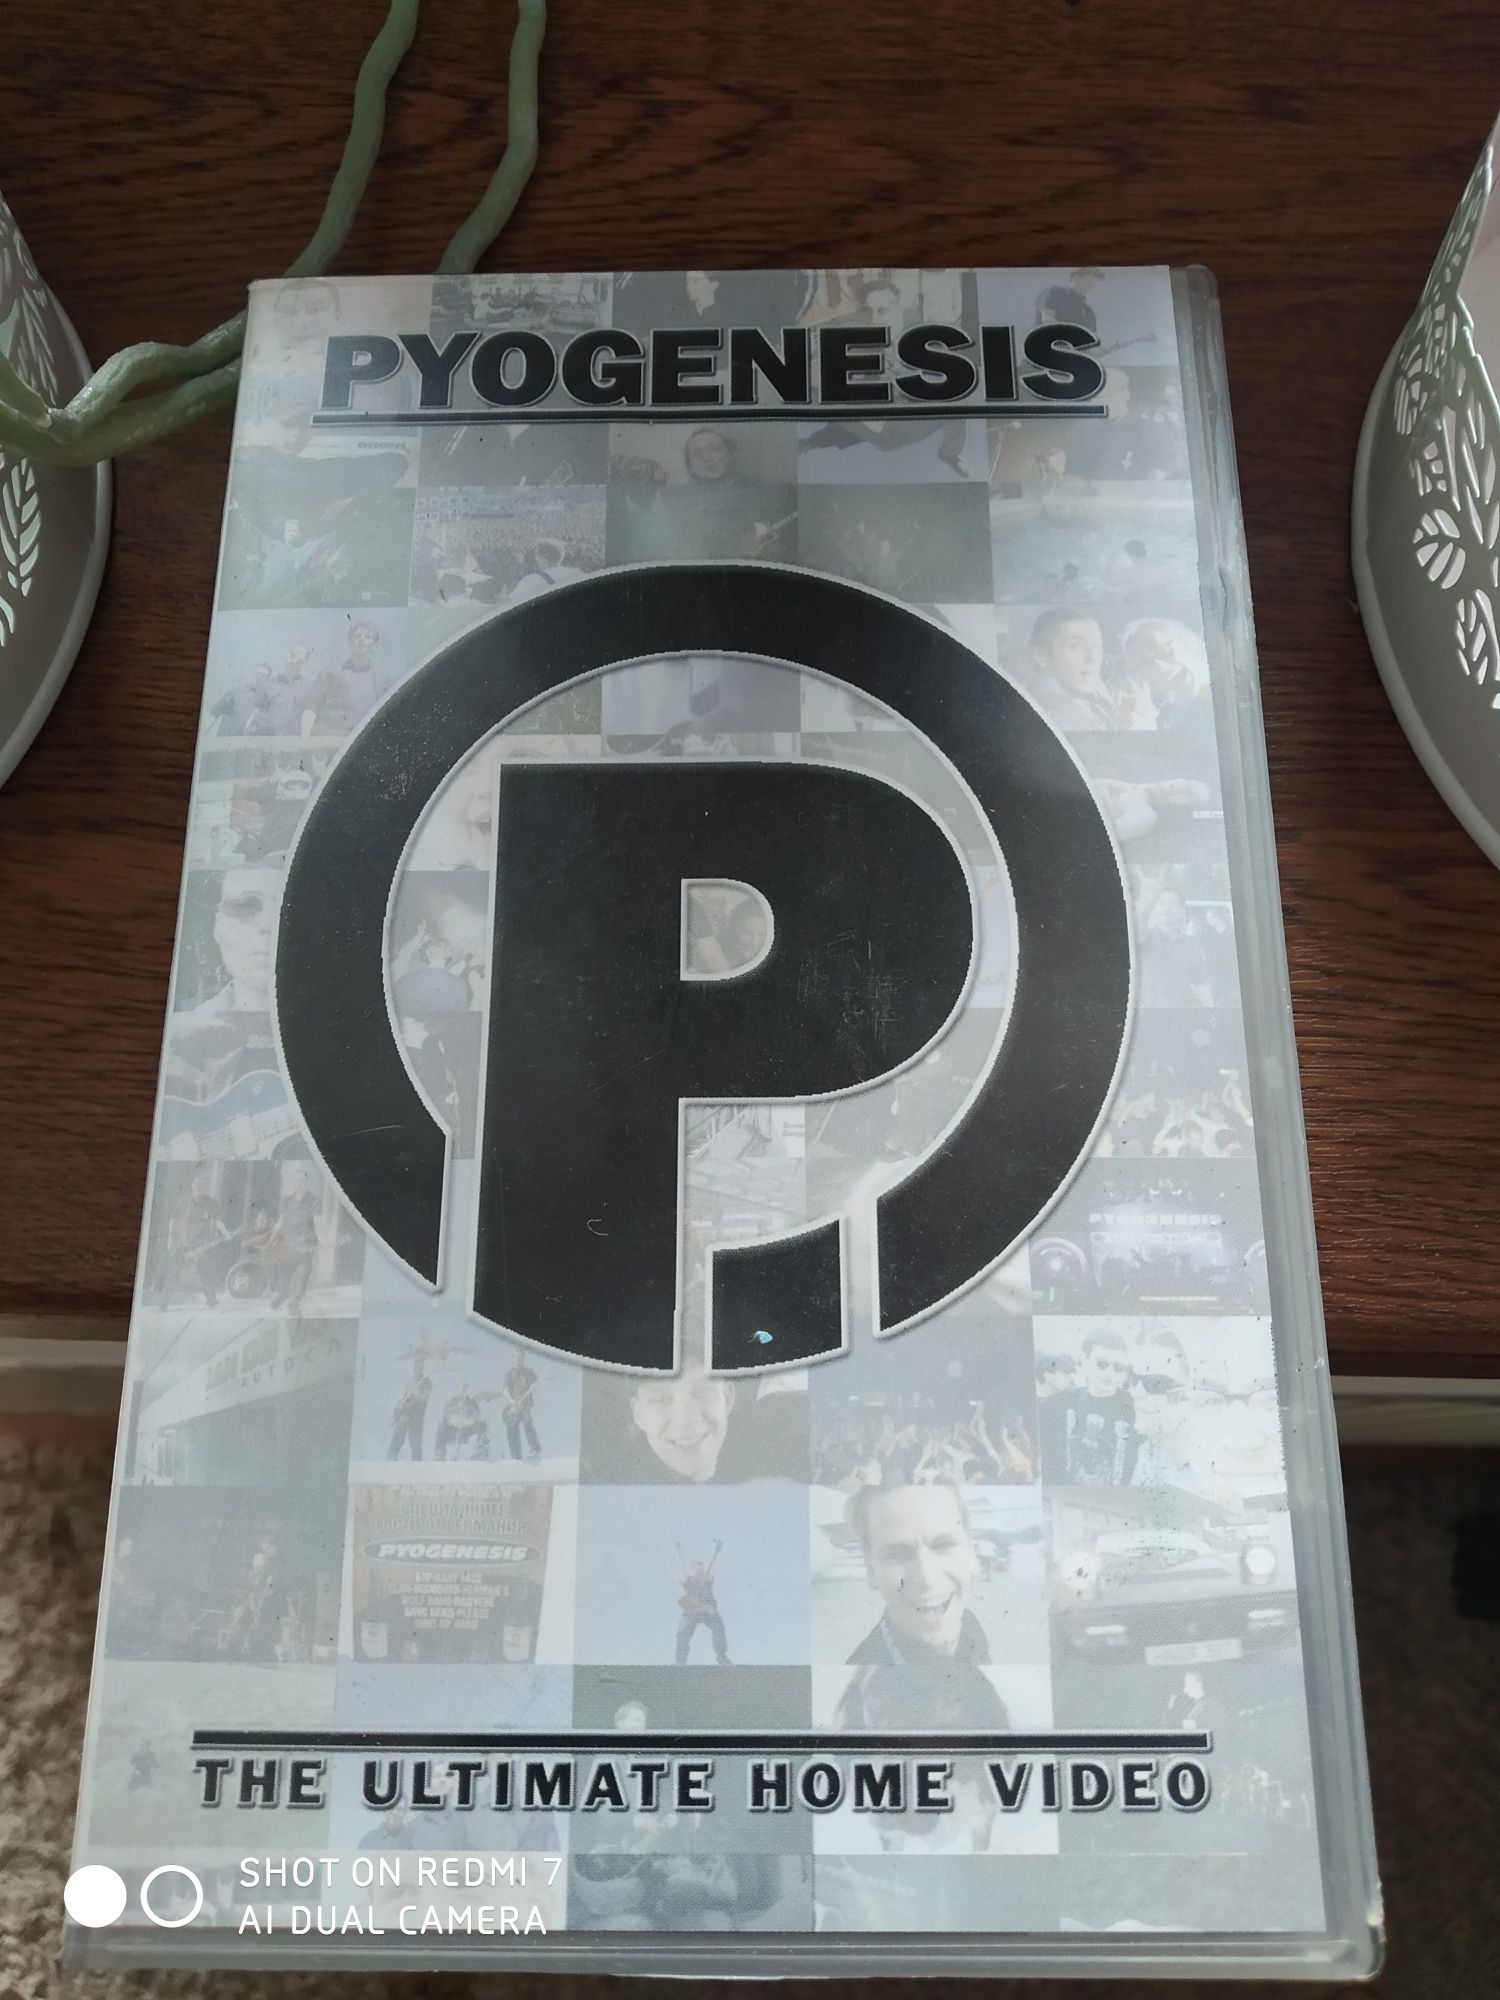 Pyogenesis video